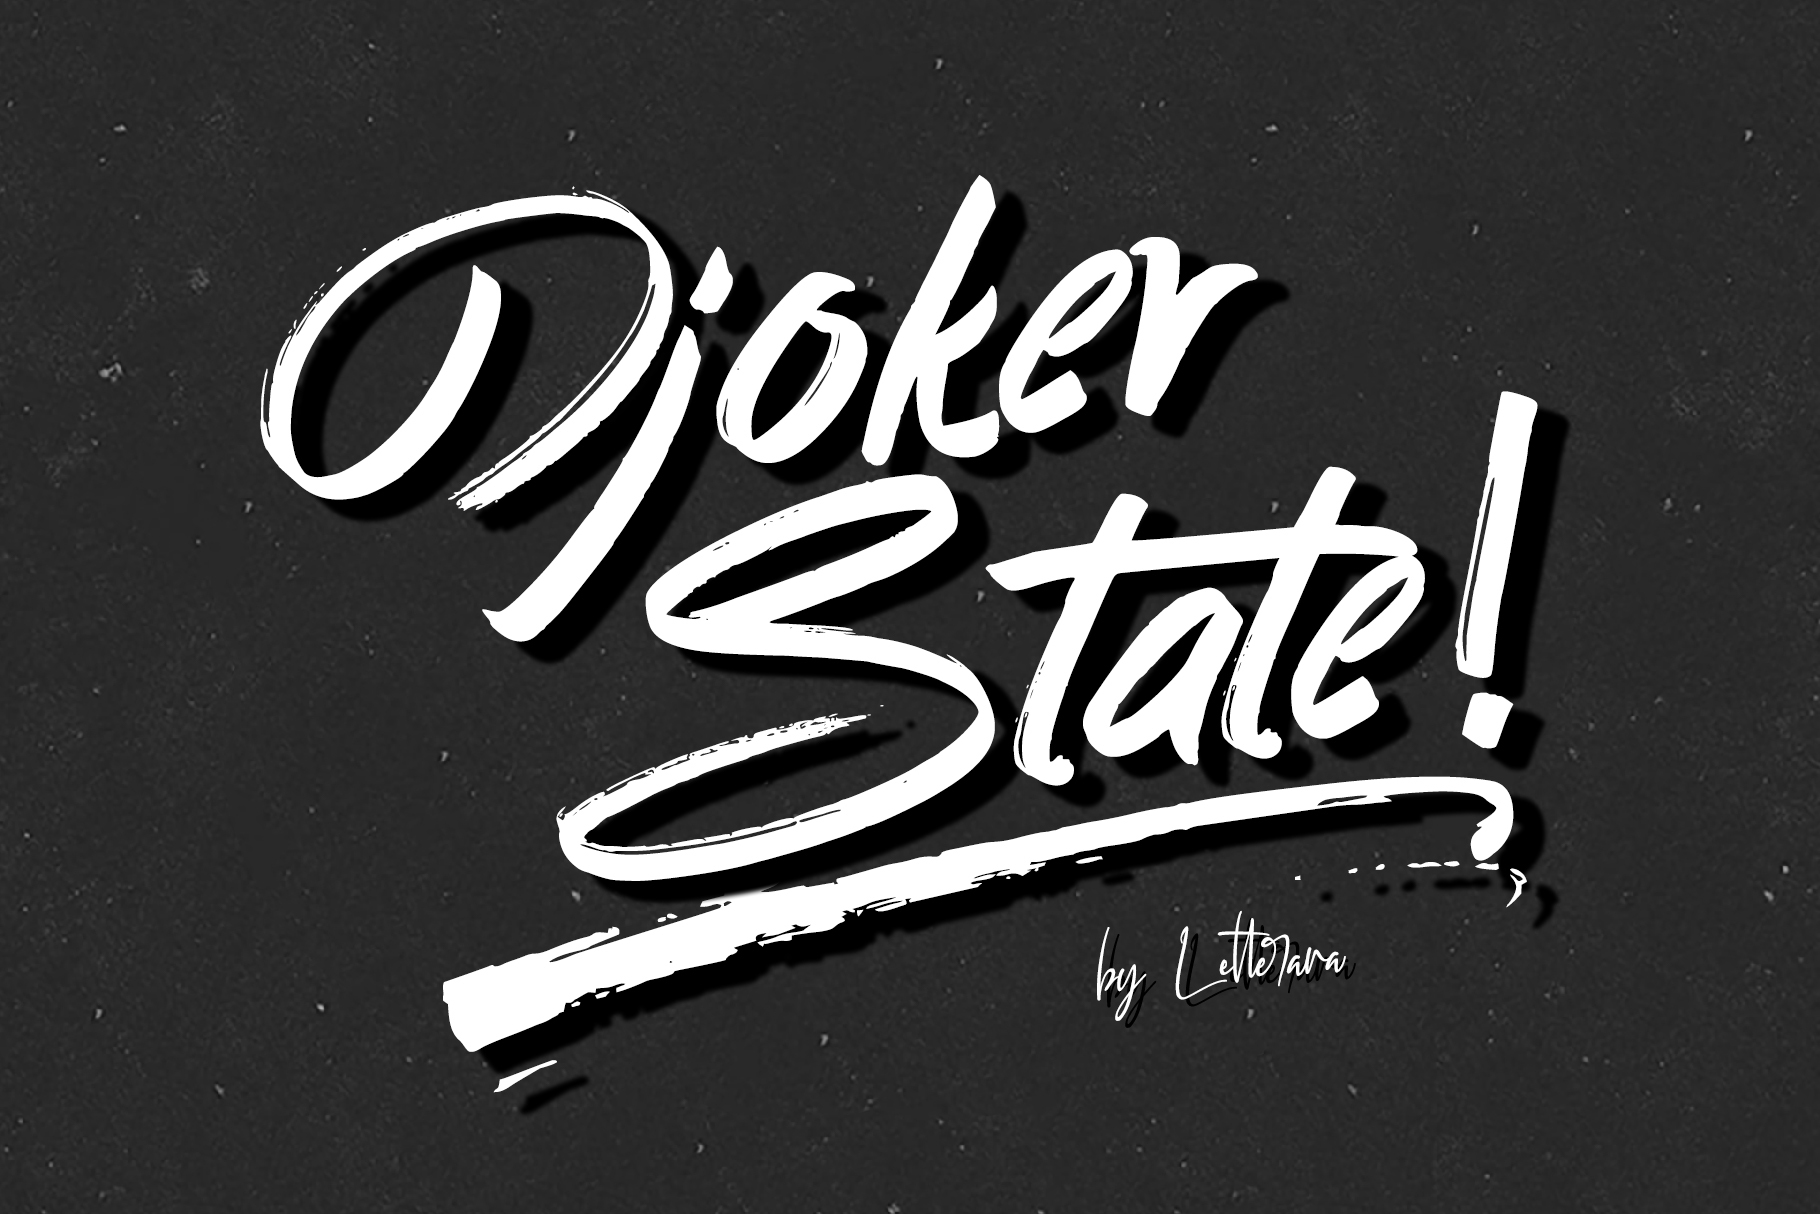 Djoker State